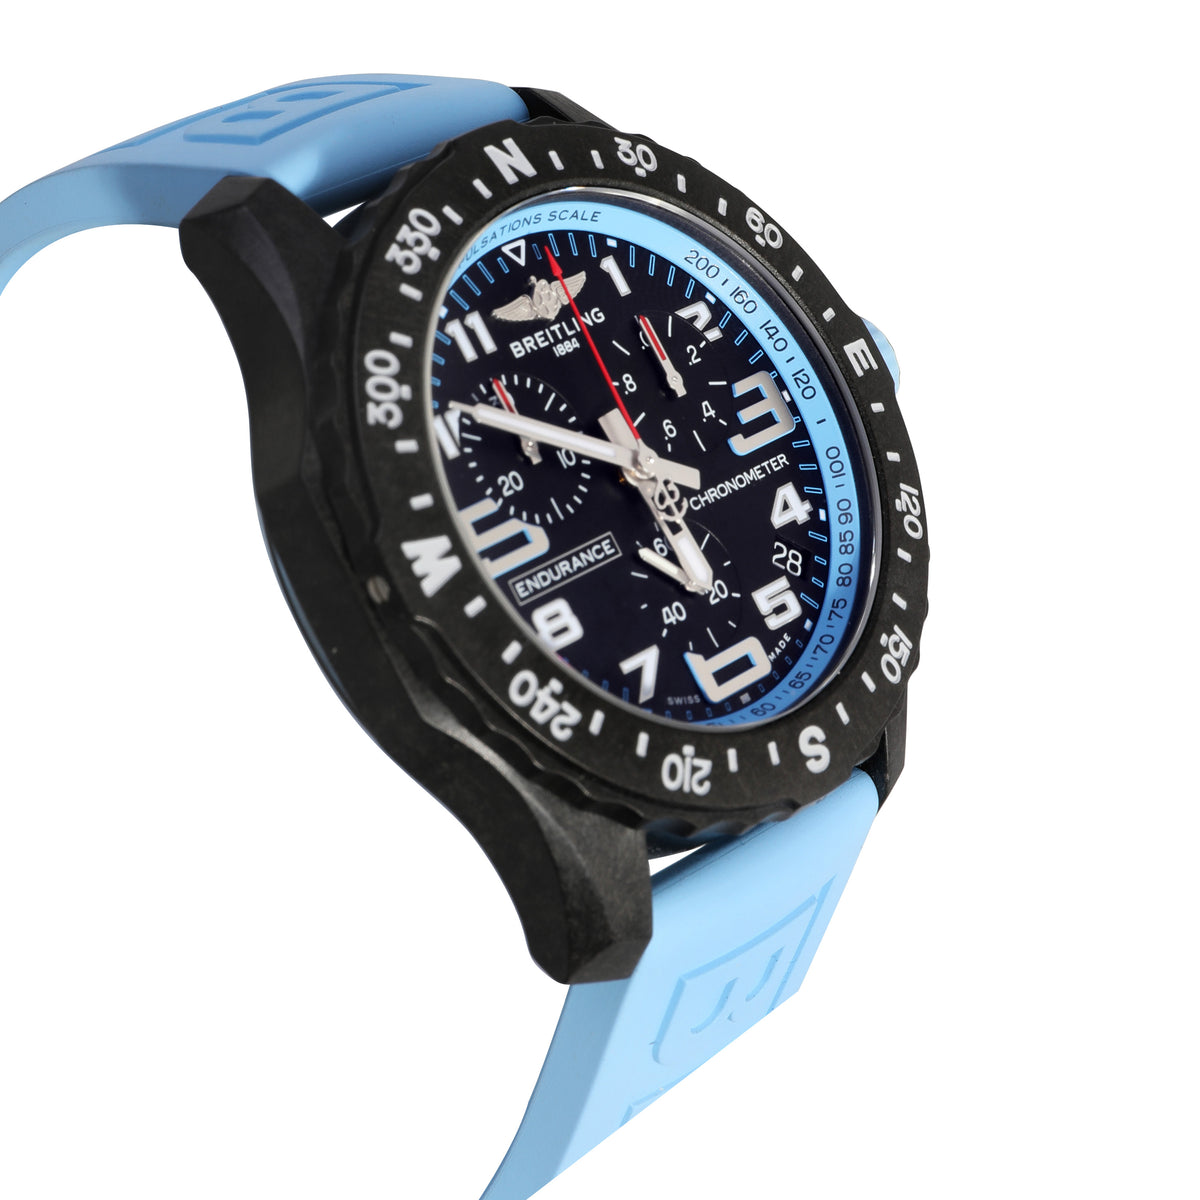 Breitling Endurance X82310D51B1S1 Men's Watch in  Polymer